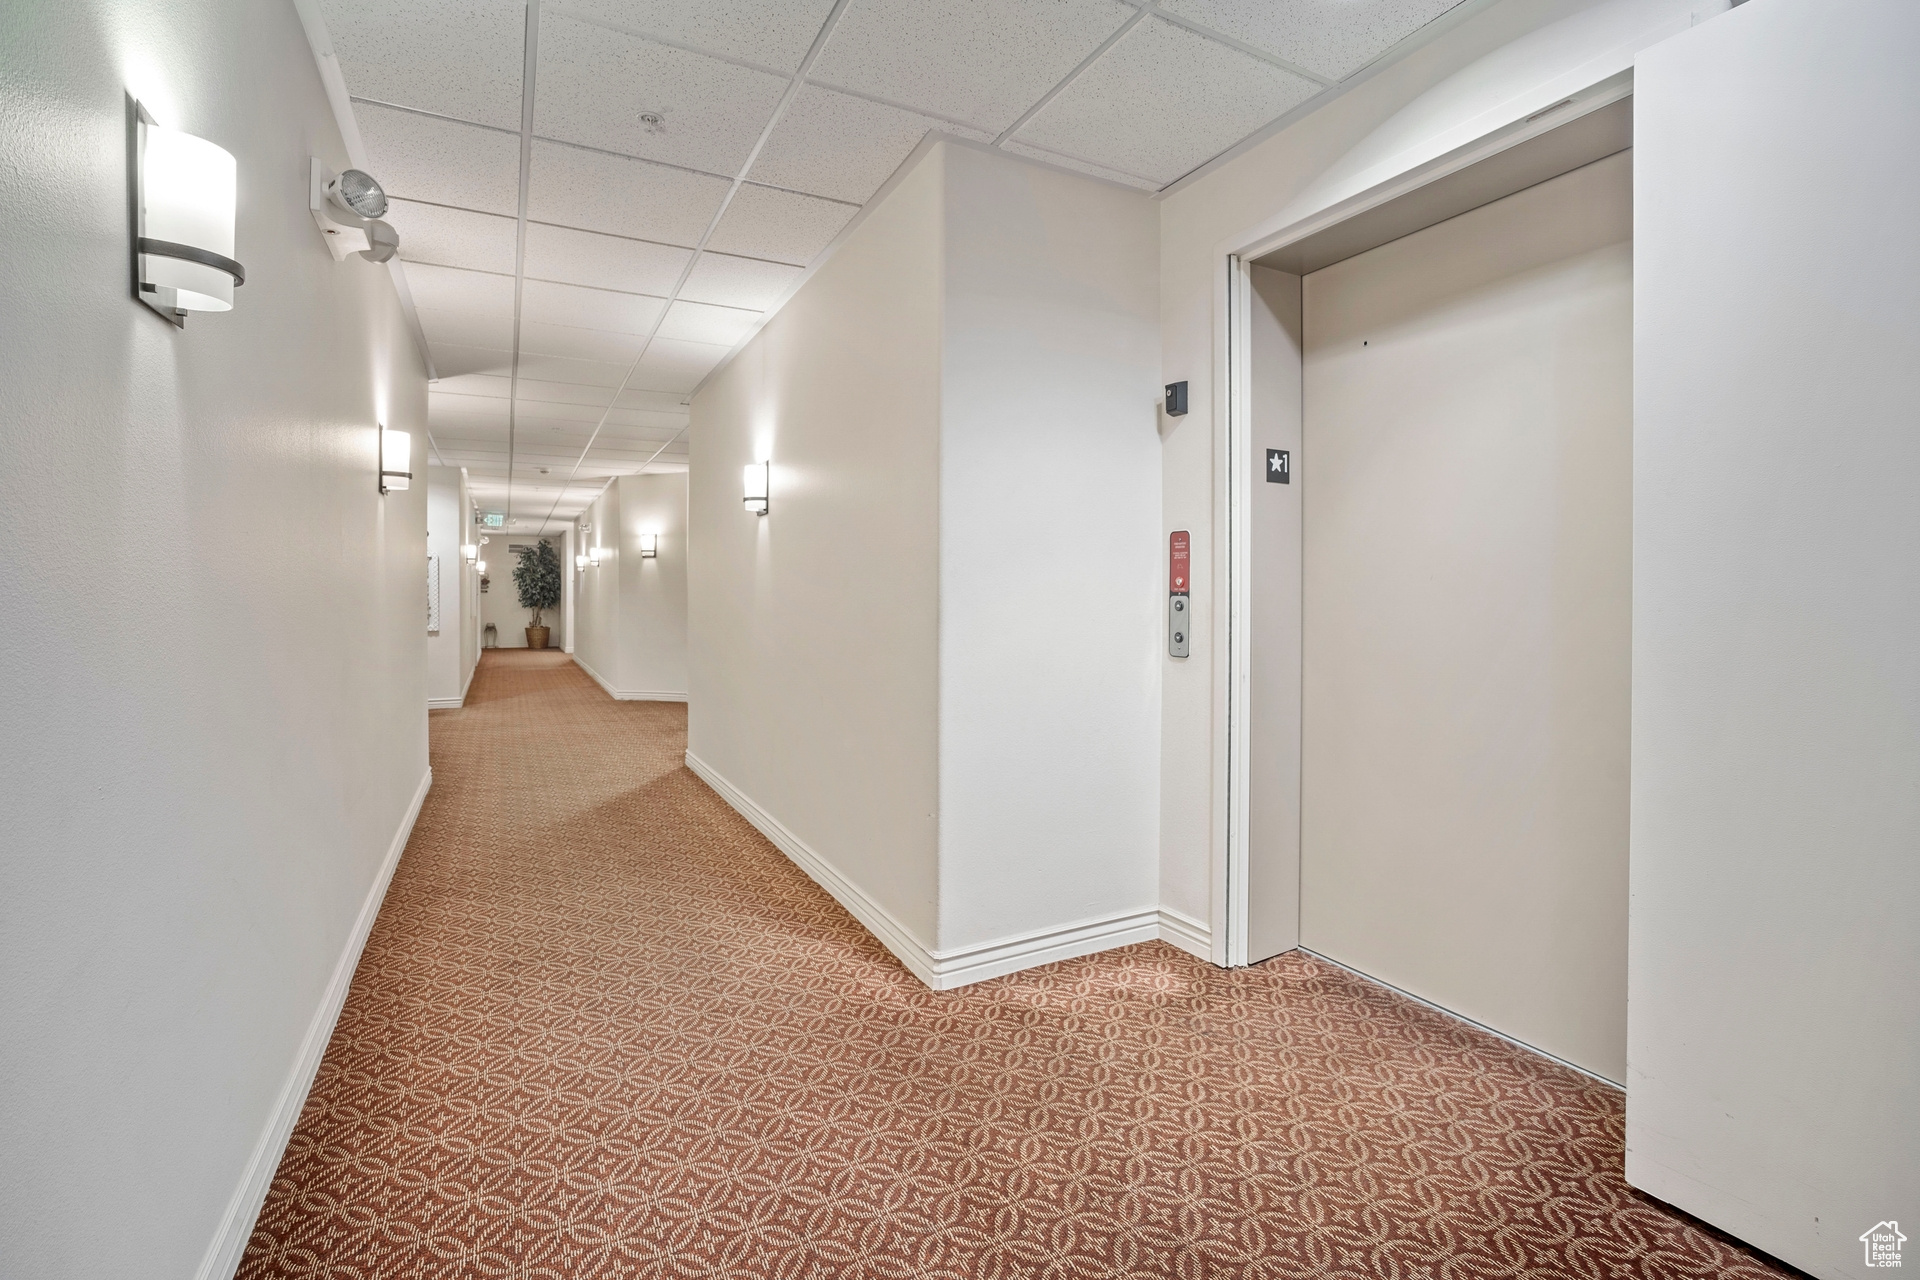 Hallway/elevator